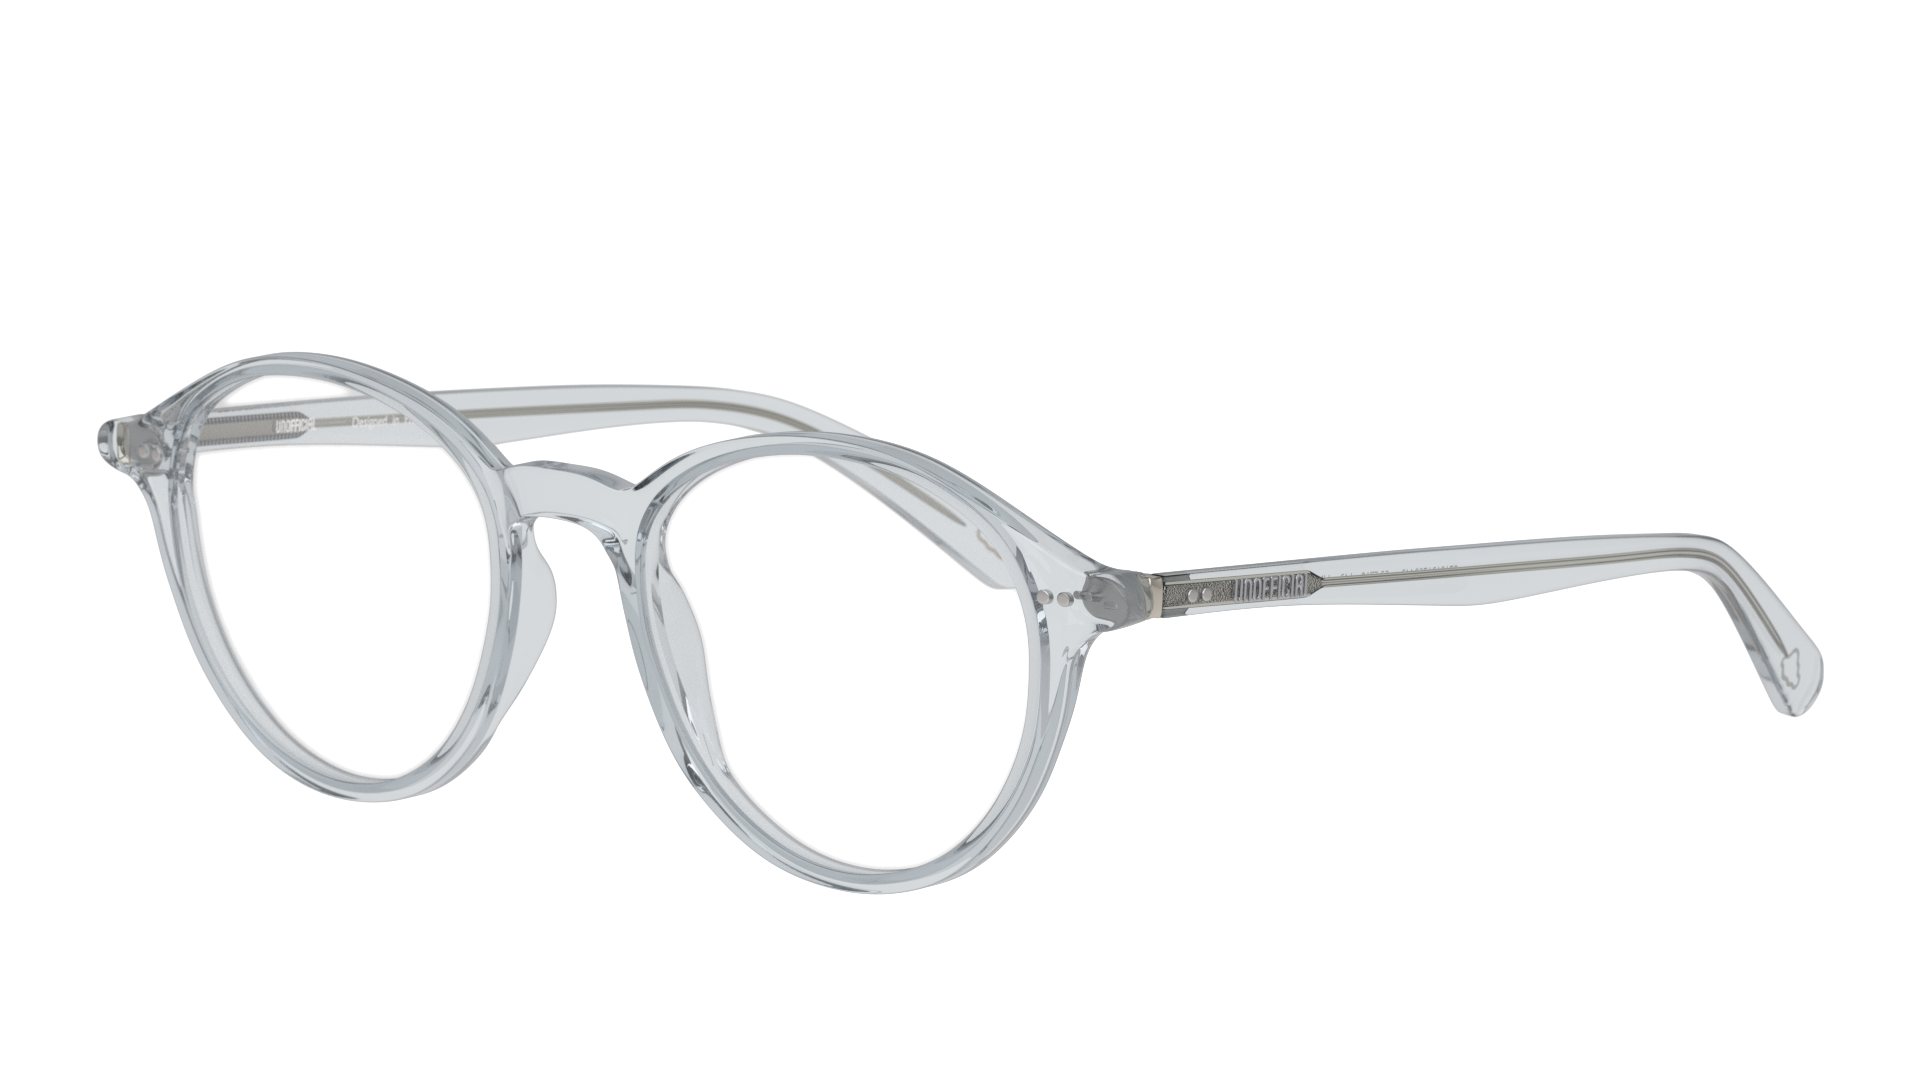 Angle_Left01 Unofficial UNOM0185 (GG00) Glasses Transparent / Transparent, Grey